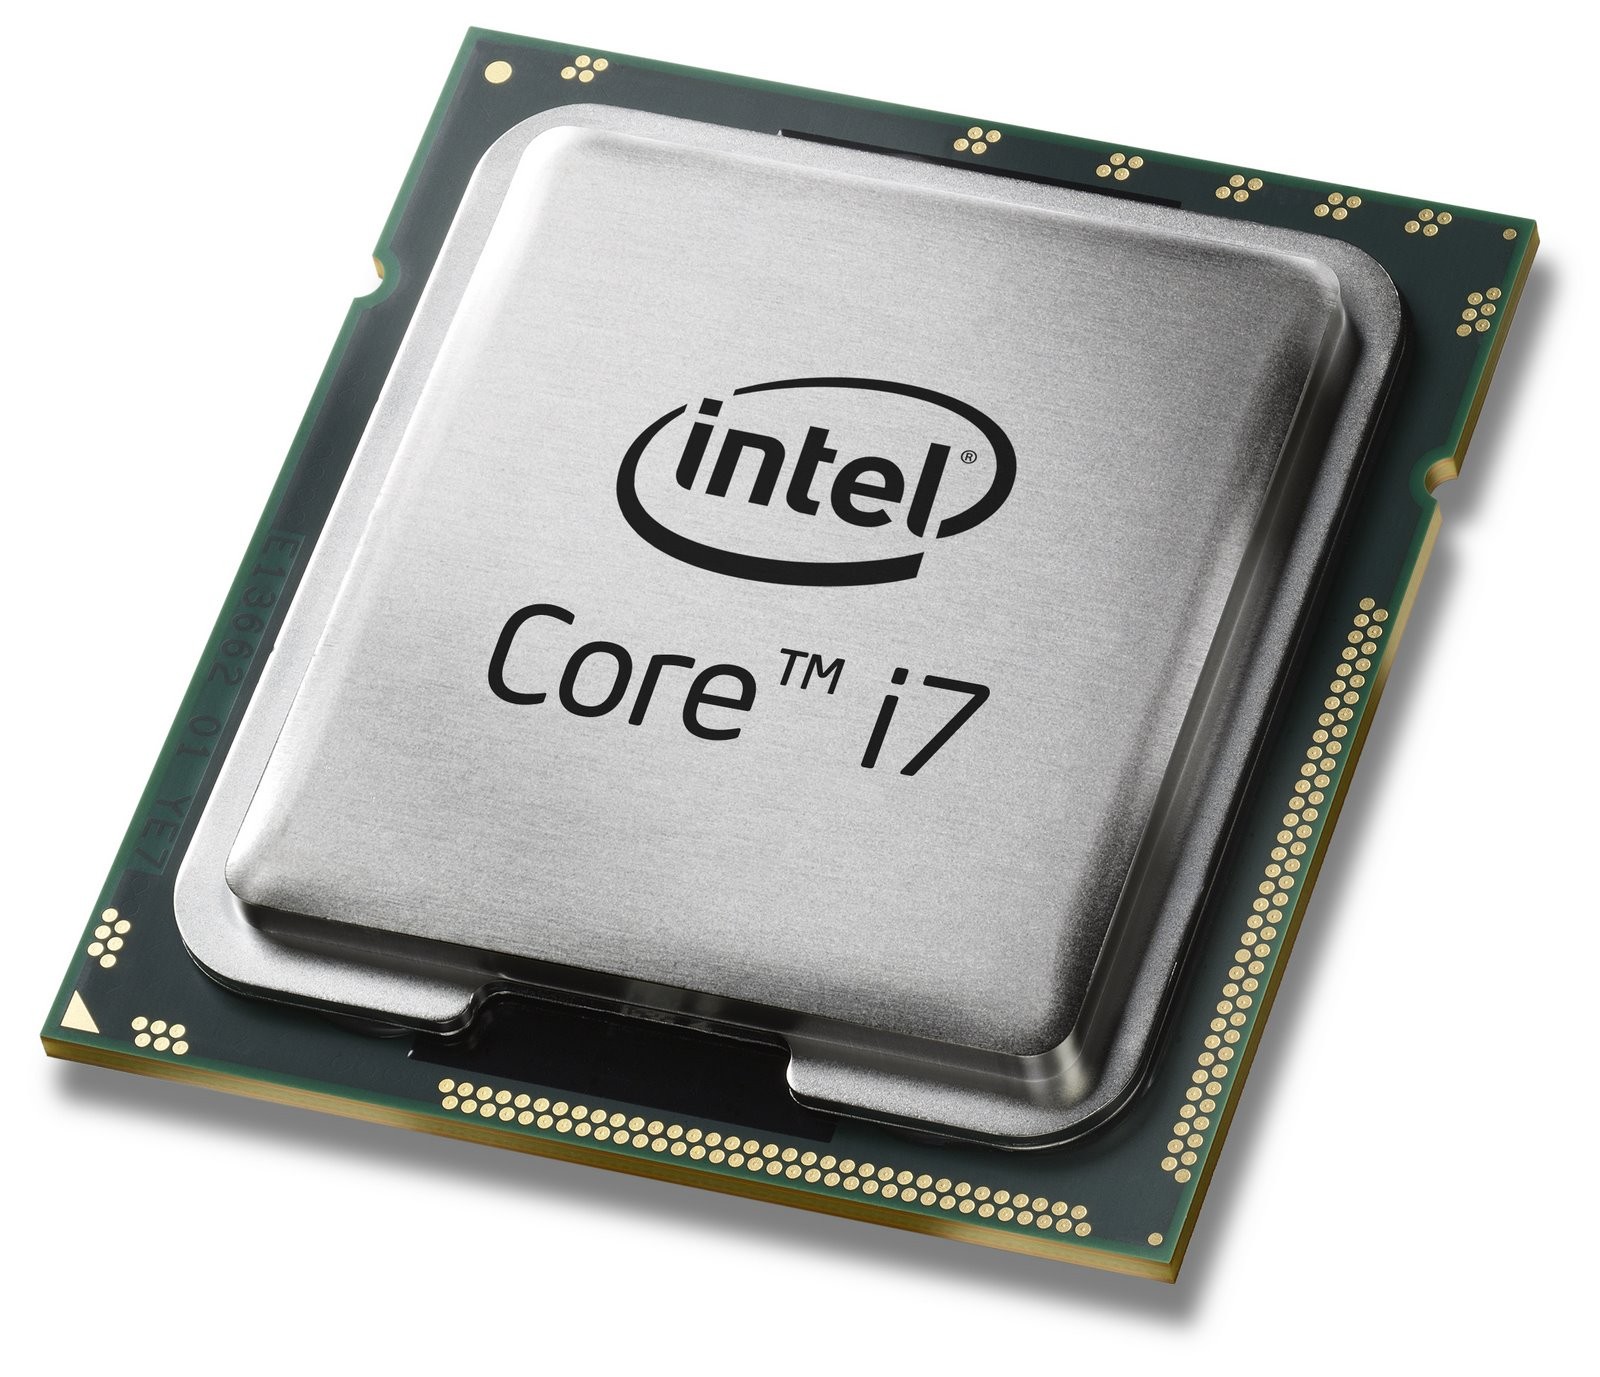 500030368-Intel Core i7-4700HQ SR15E 2.4Ghz 5GT/s BGA 1364 Processor-image